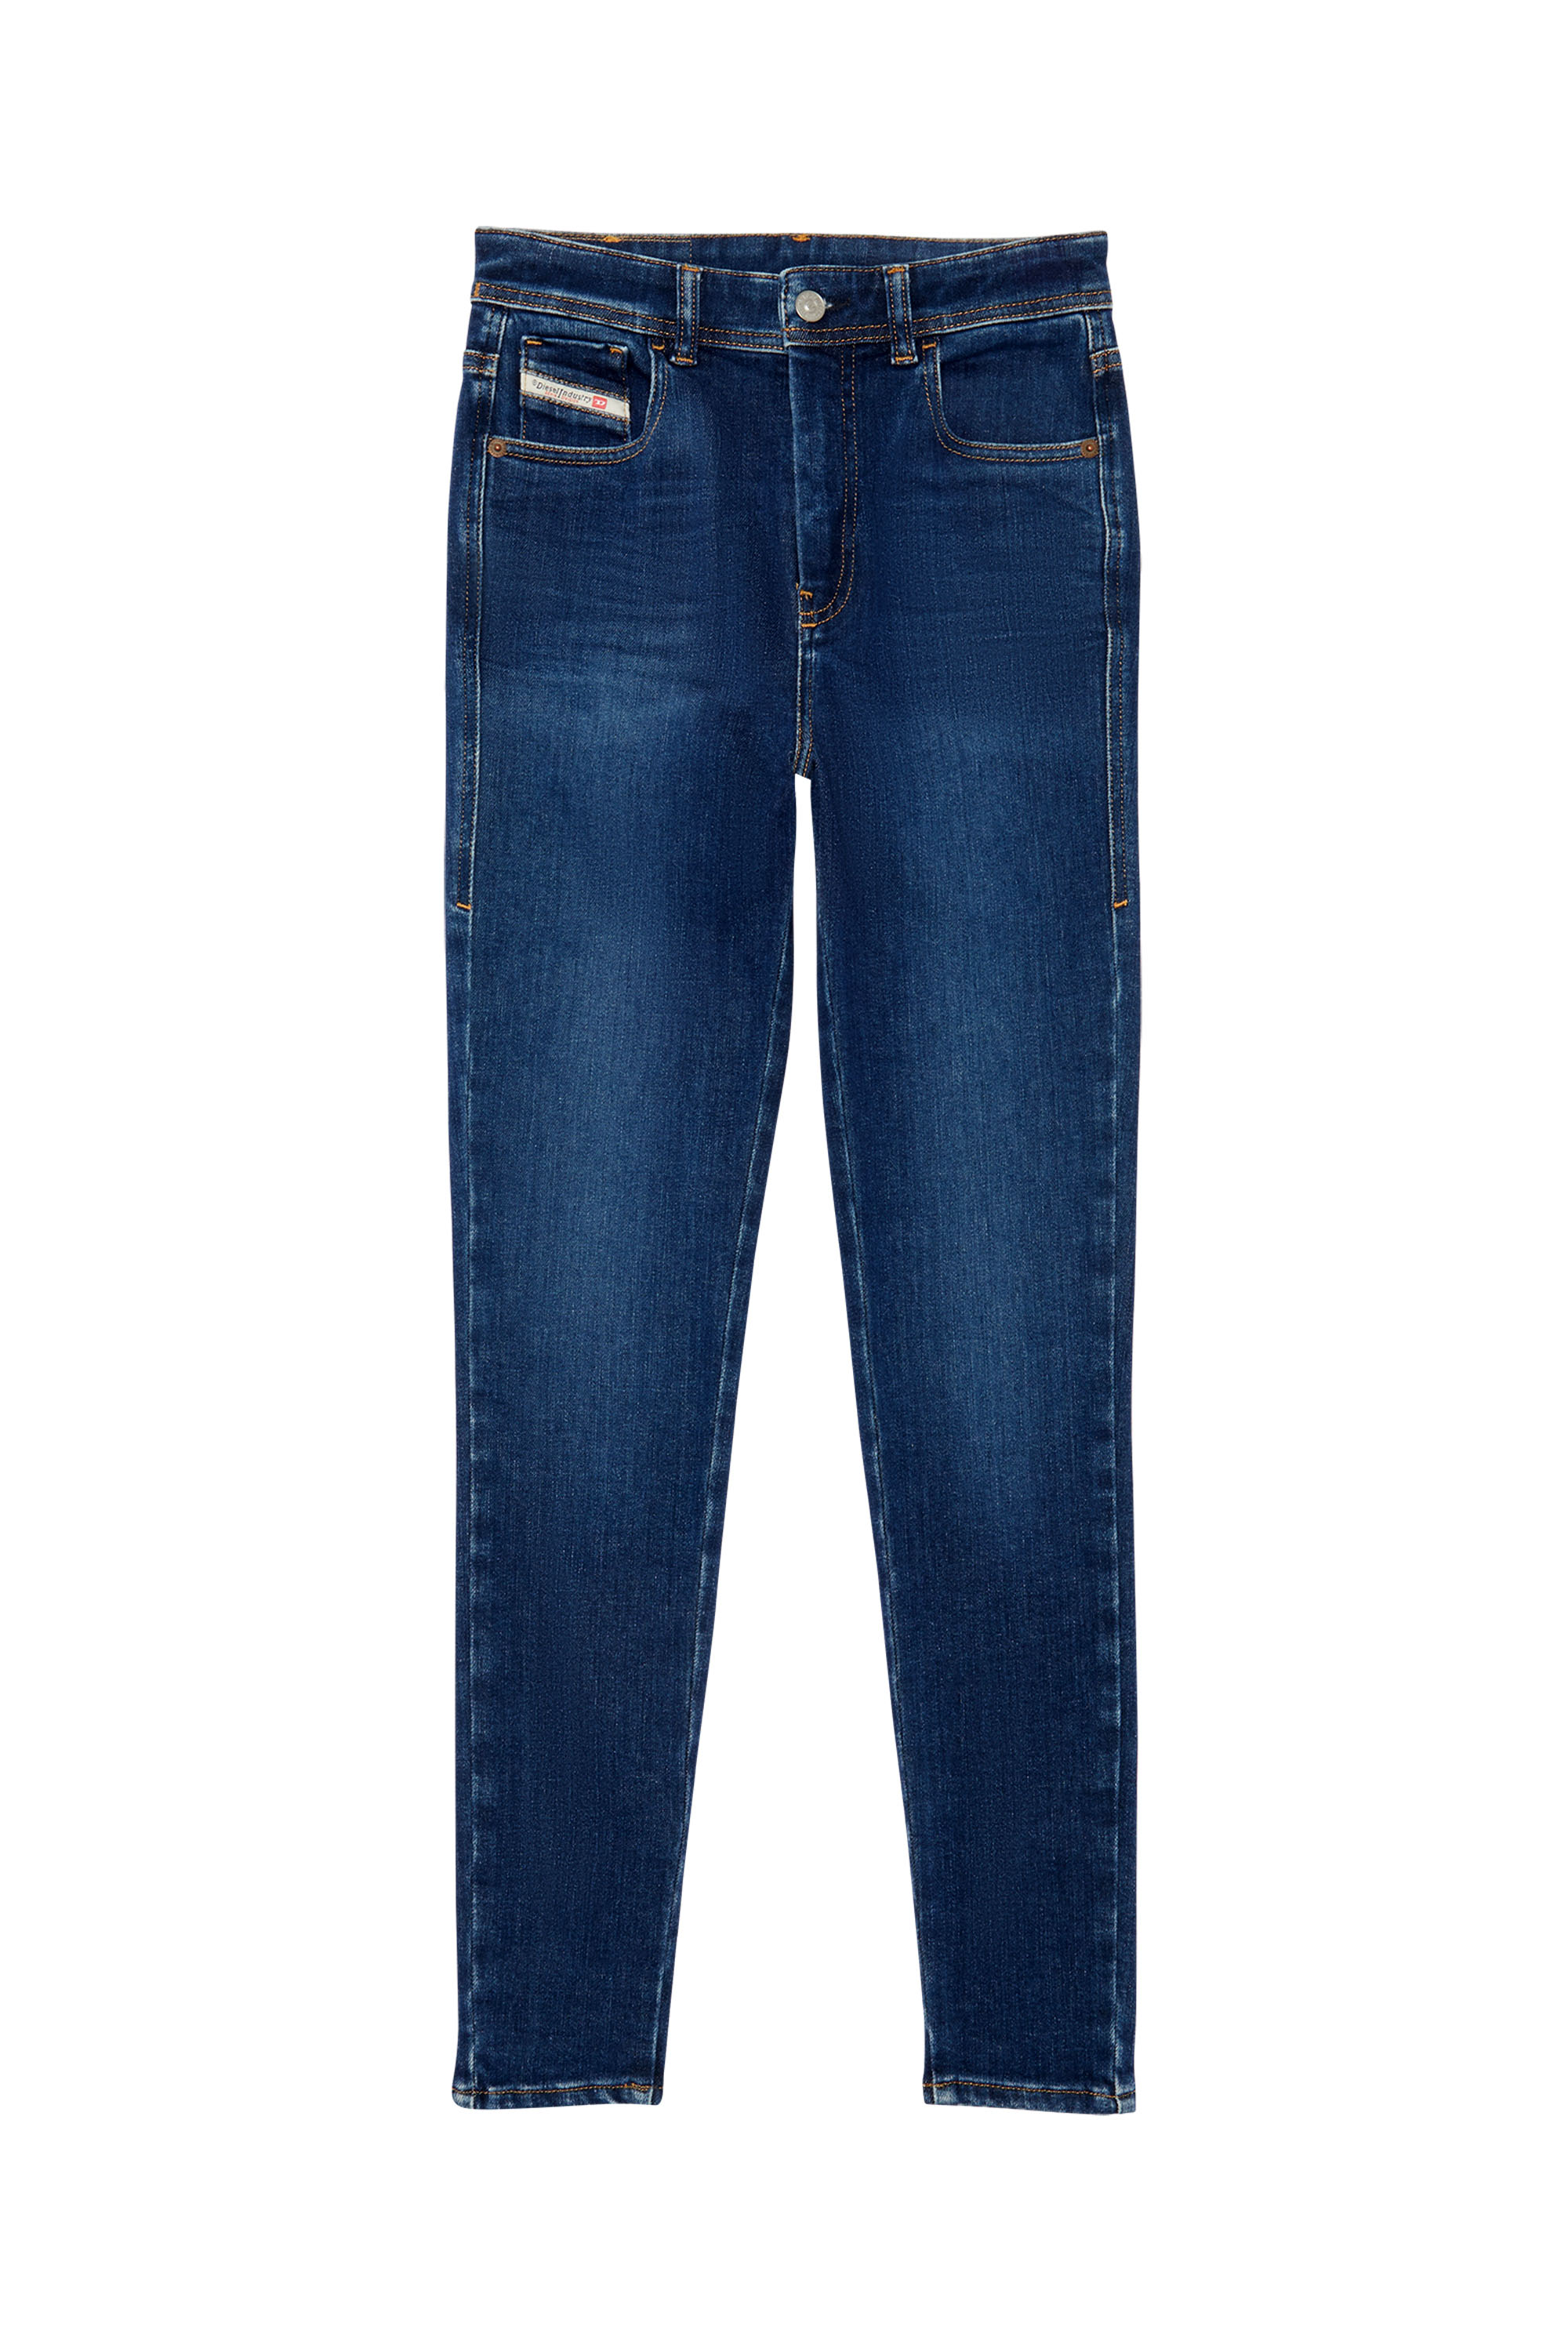 1984 Slandy high 09C19 Super skinny Jeans, Dark Blue - Jeans